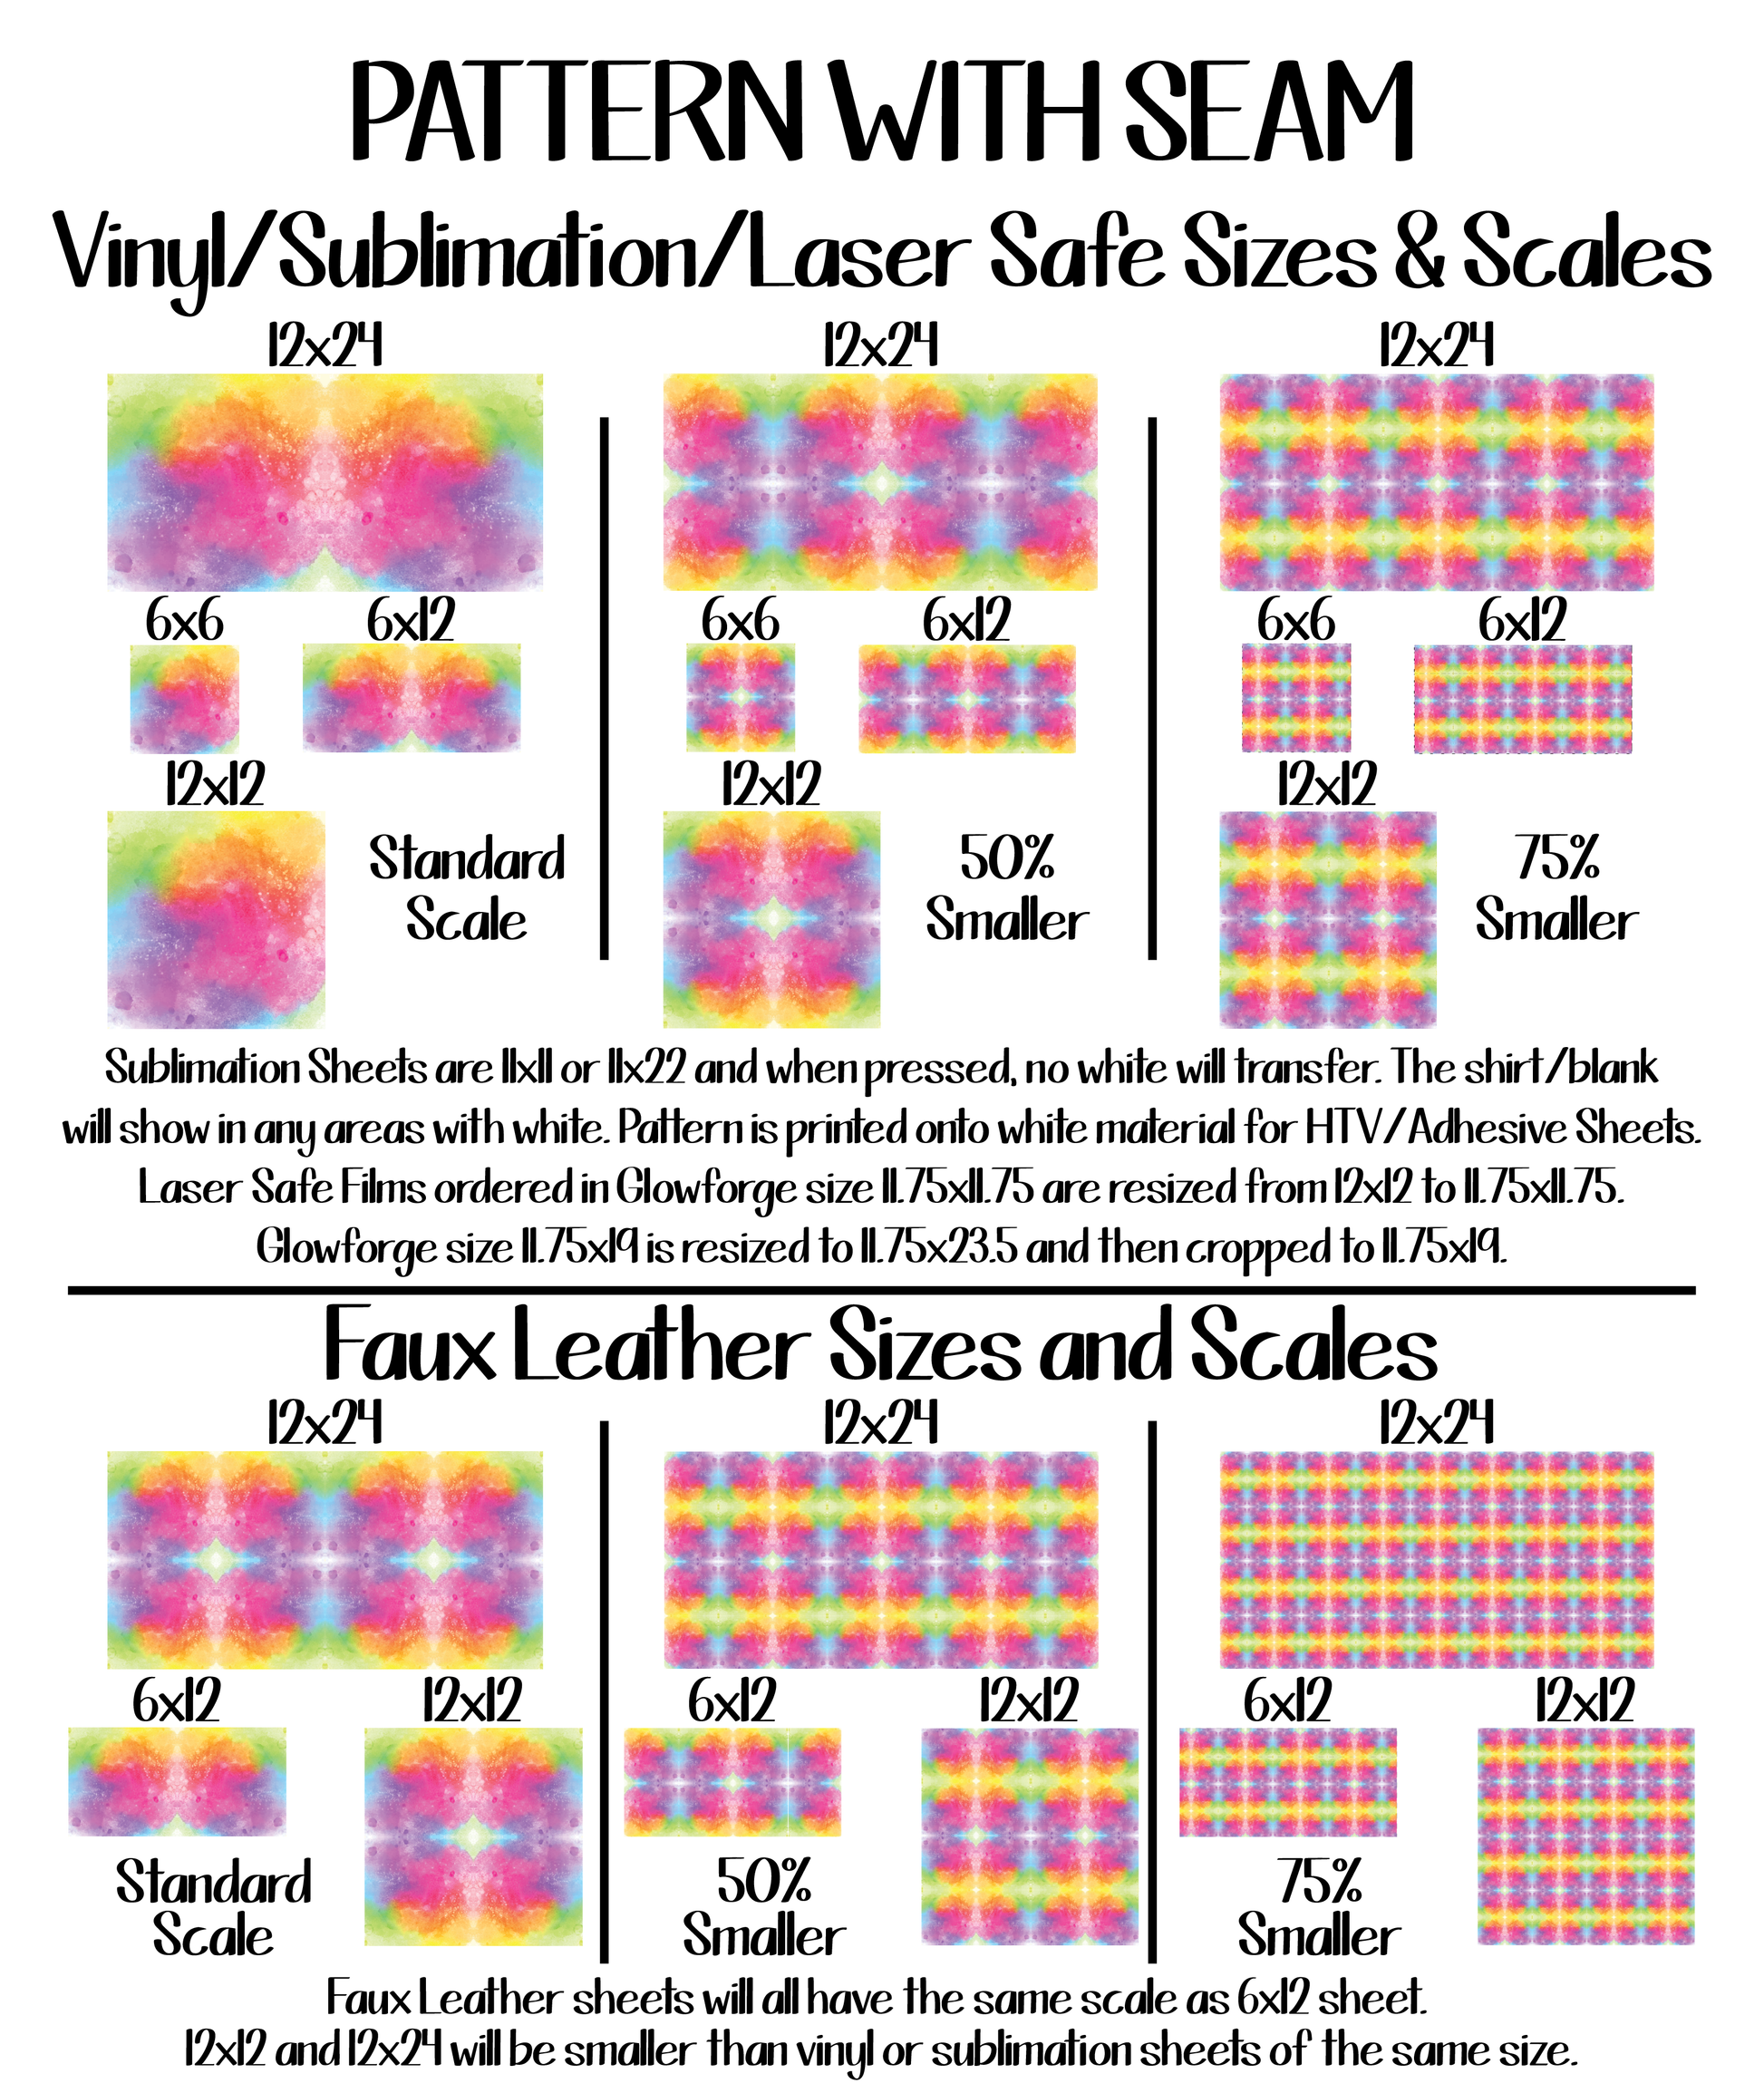 Pink Leopard print craft patterned vinyl sheet, heat transfer/HTV or A